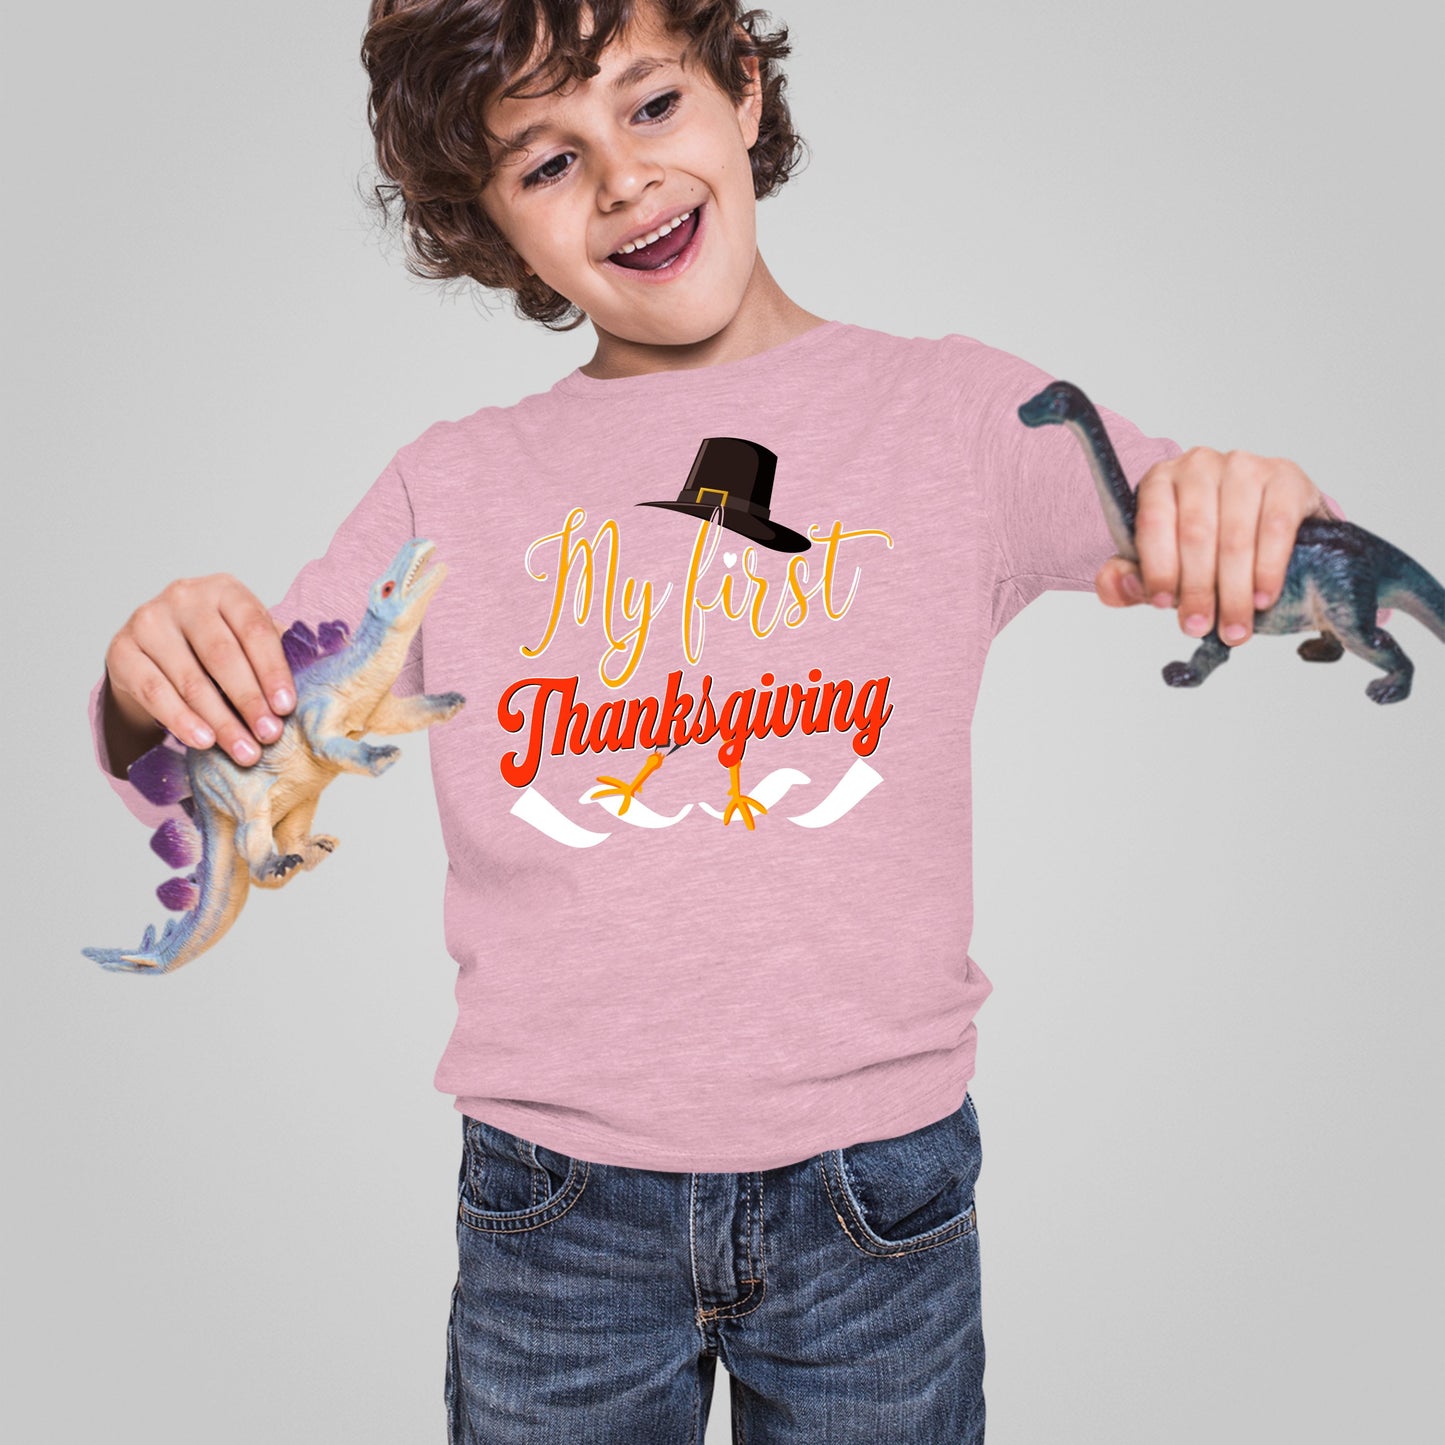 My First Thanks Giving, Thanksgiving Sweatshirt, Thanksgiving Sweater for kids, Thanksgiving Gift Ideas, Cute Thanksgiving